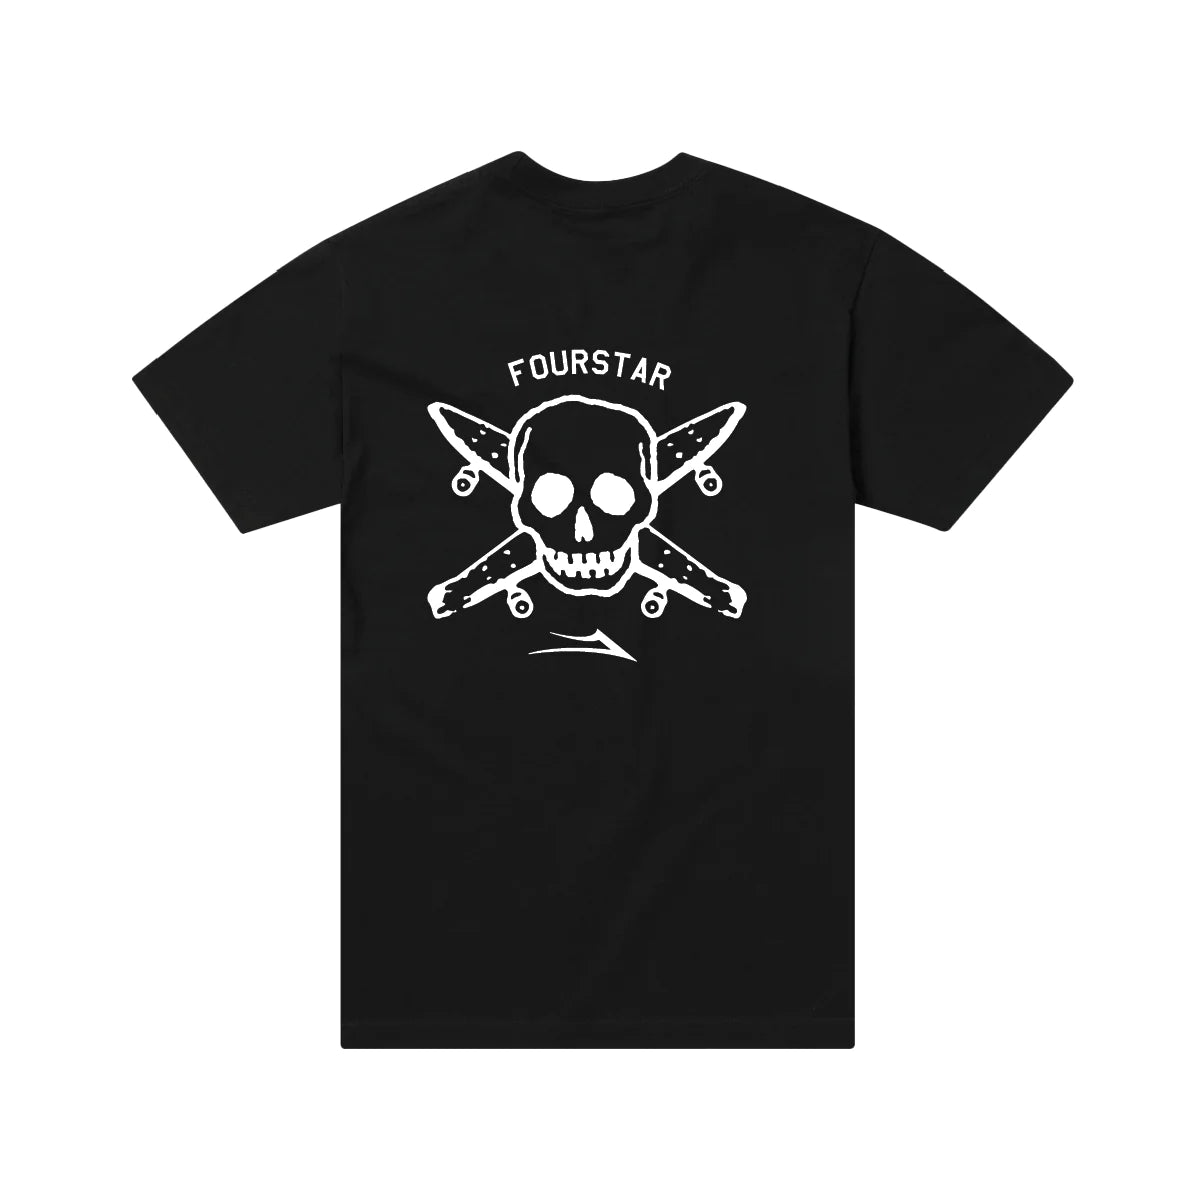 Lakai Footwear - Lakai x Fourstar Street Pirate T-Shirt (Black)